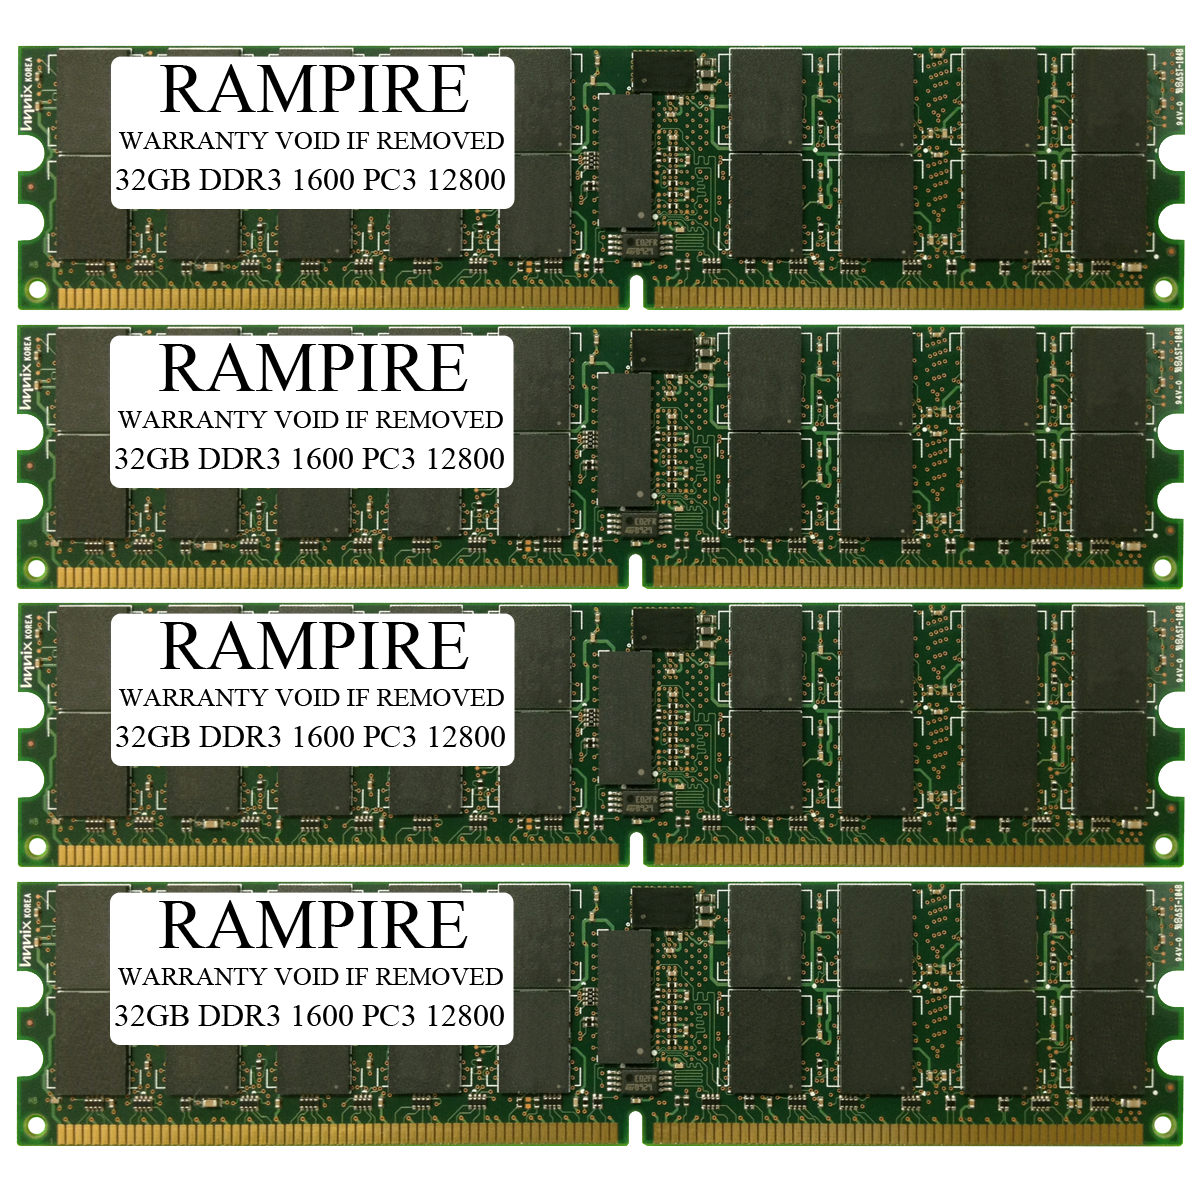 RAMPIRE 128GB (4 x 32GB) DDR3 1600 (PC3 12800) 240-Pin SDRAM 2Rx4 Standard Profile 1.5V ECC Registered Server Memory